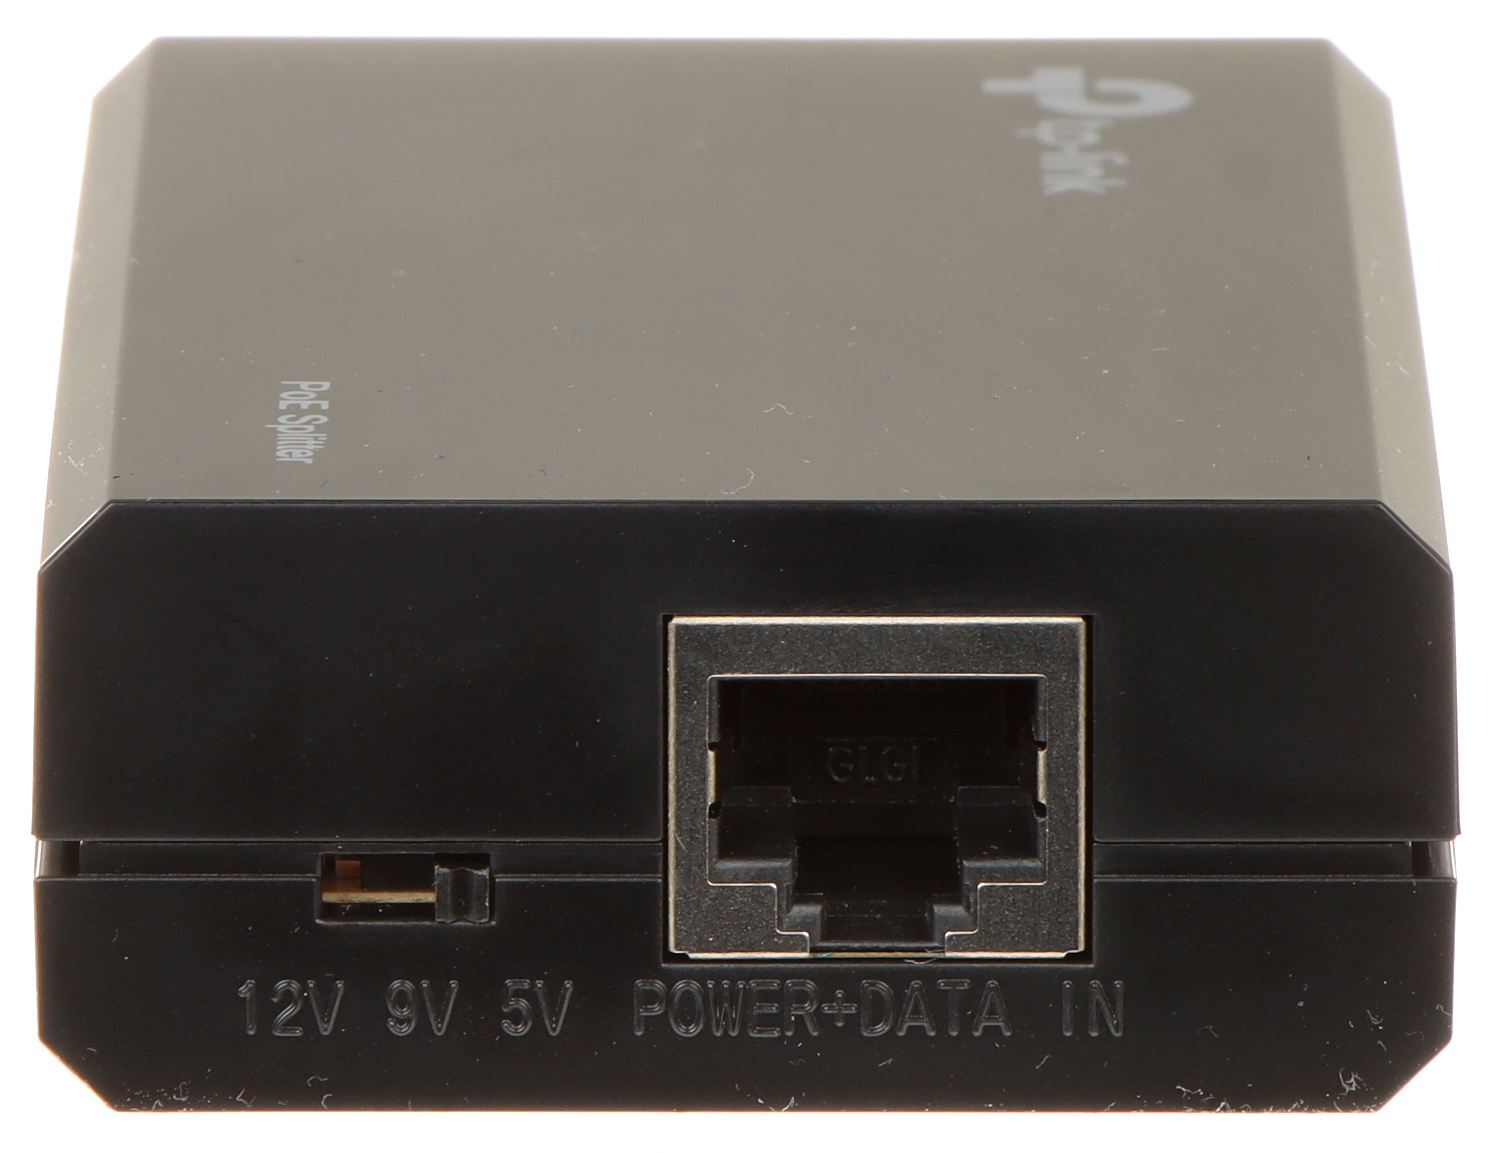 TP-LINK TL-POE10R PoE Power Over Ethernet Gigabit Splitter 5V 9V 12V DC Output 